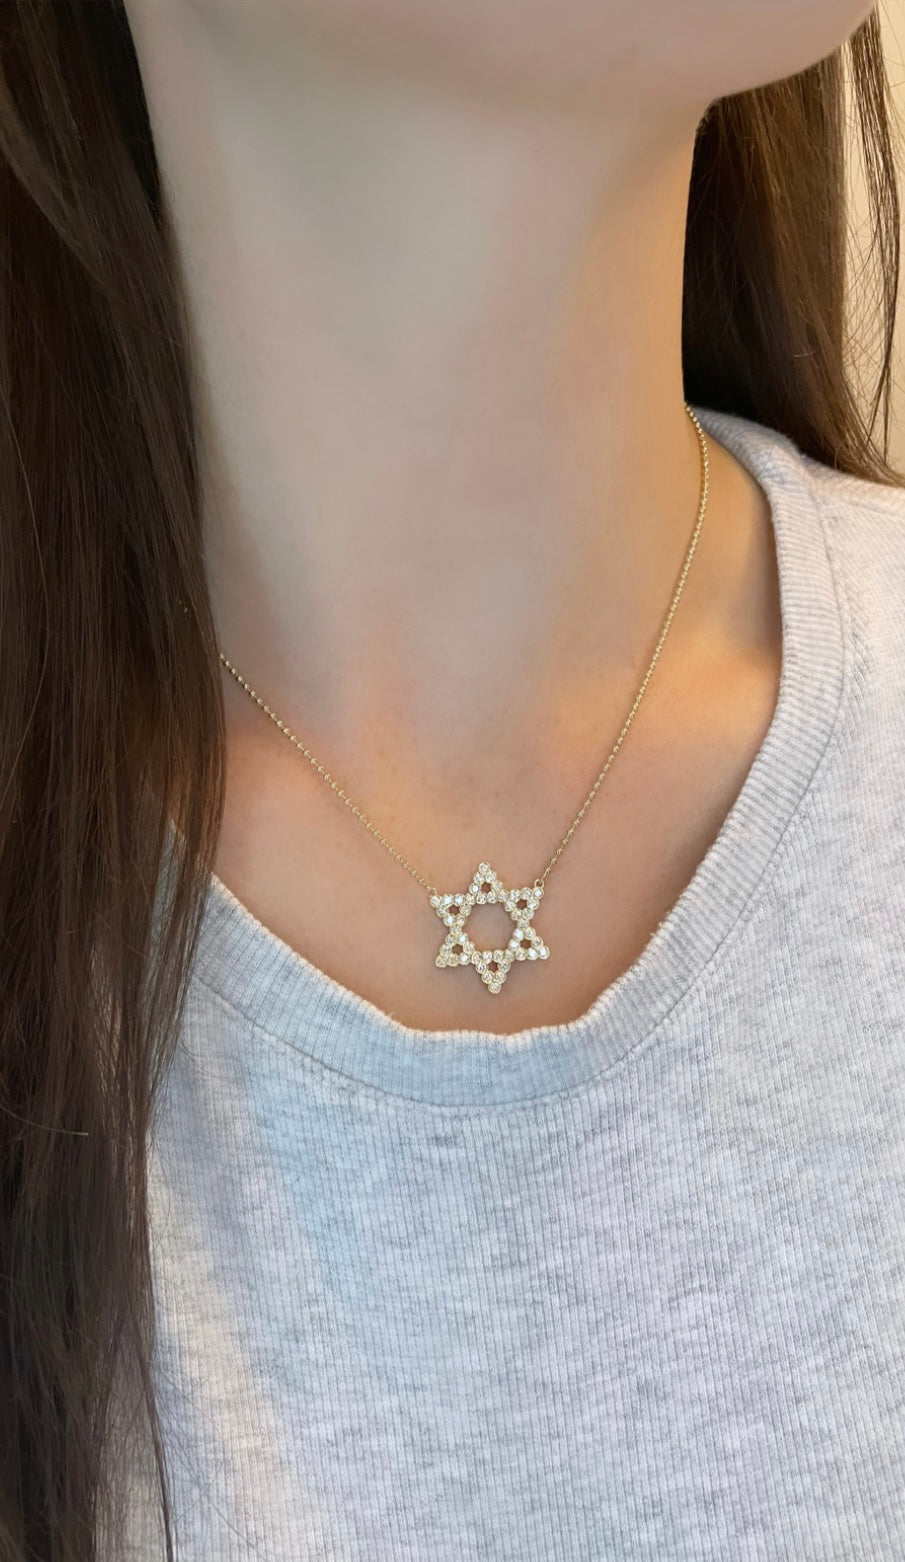 The Bezeled Mazel Necklace